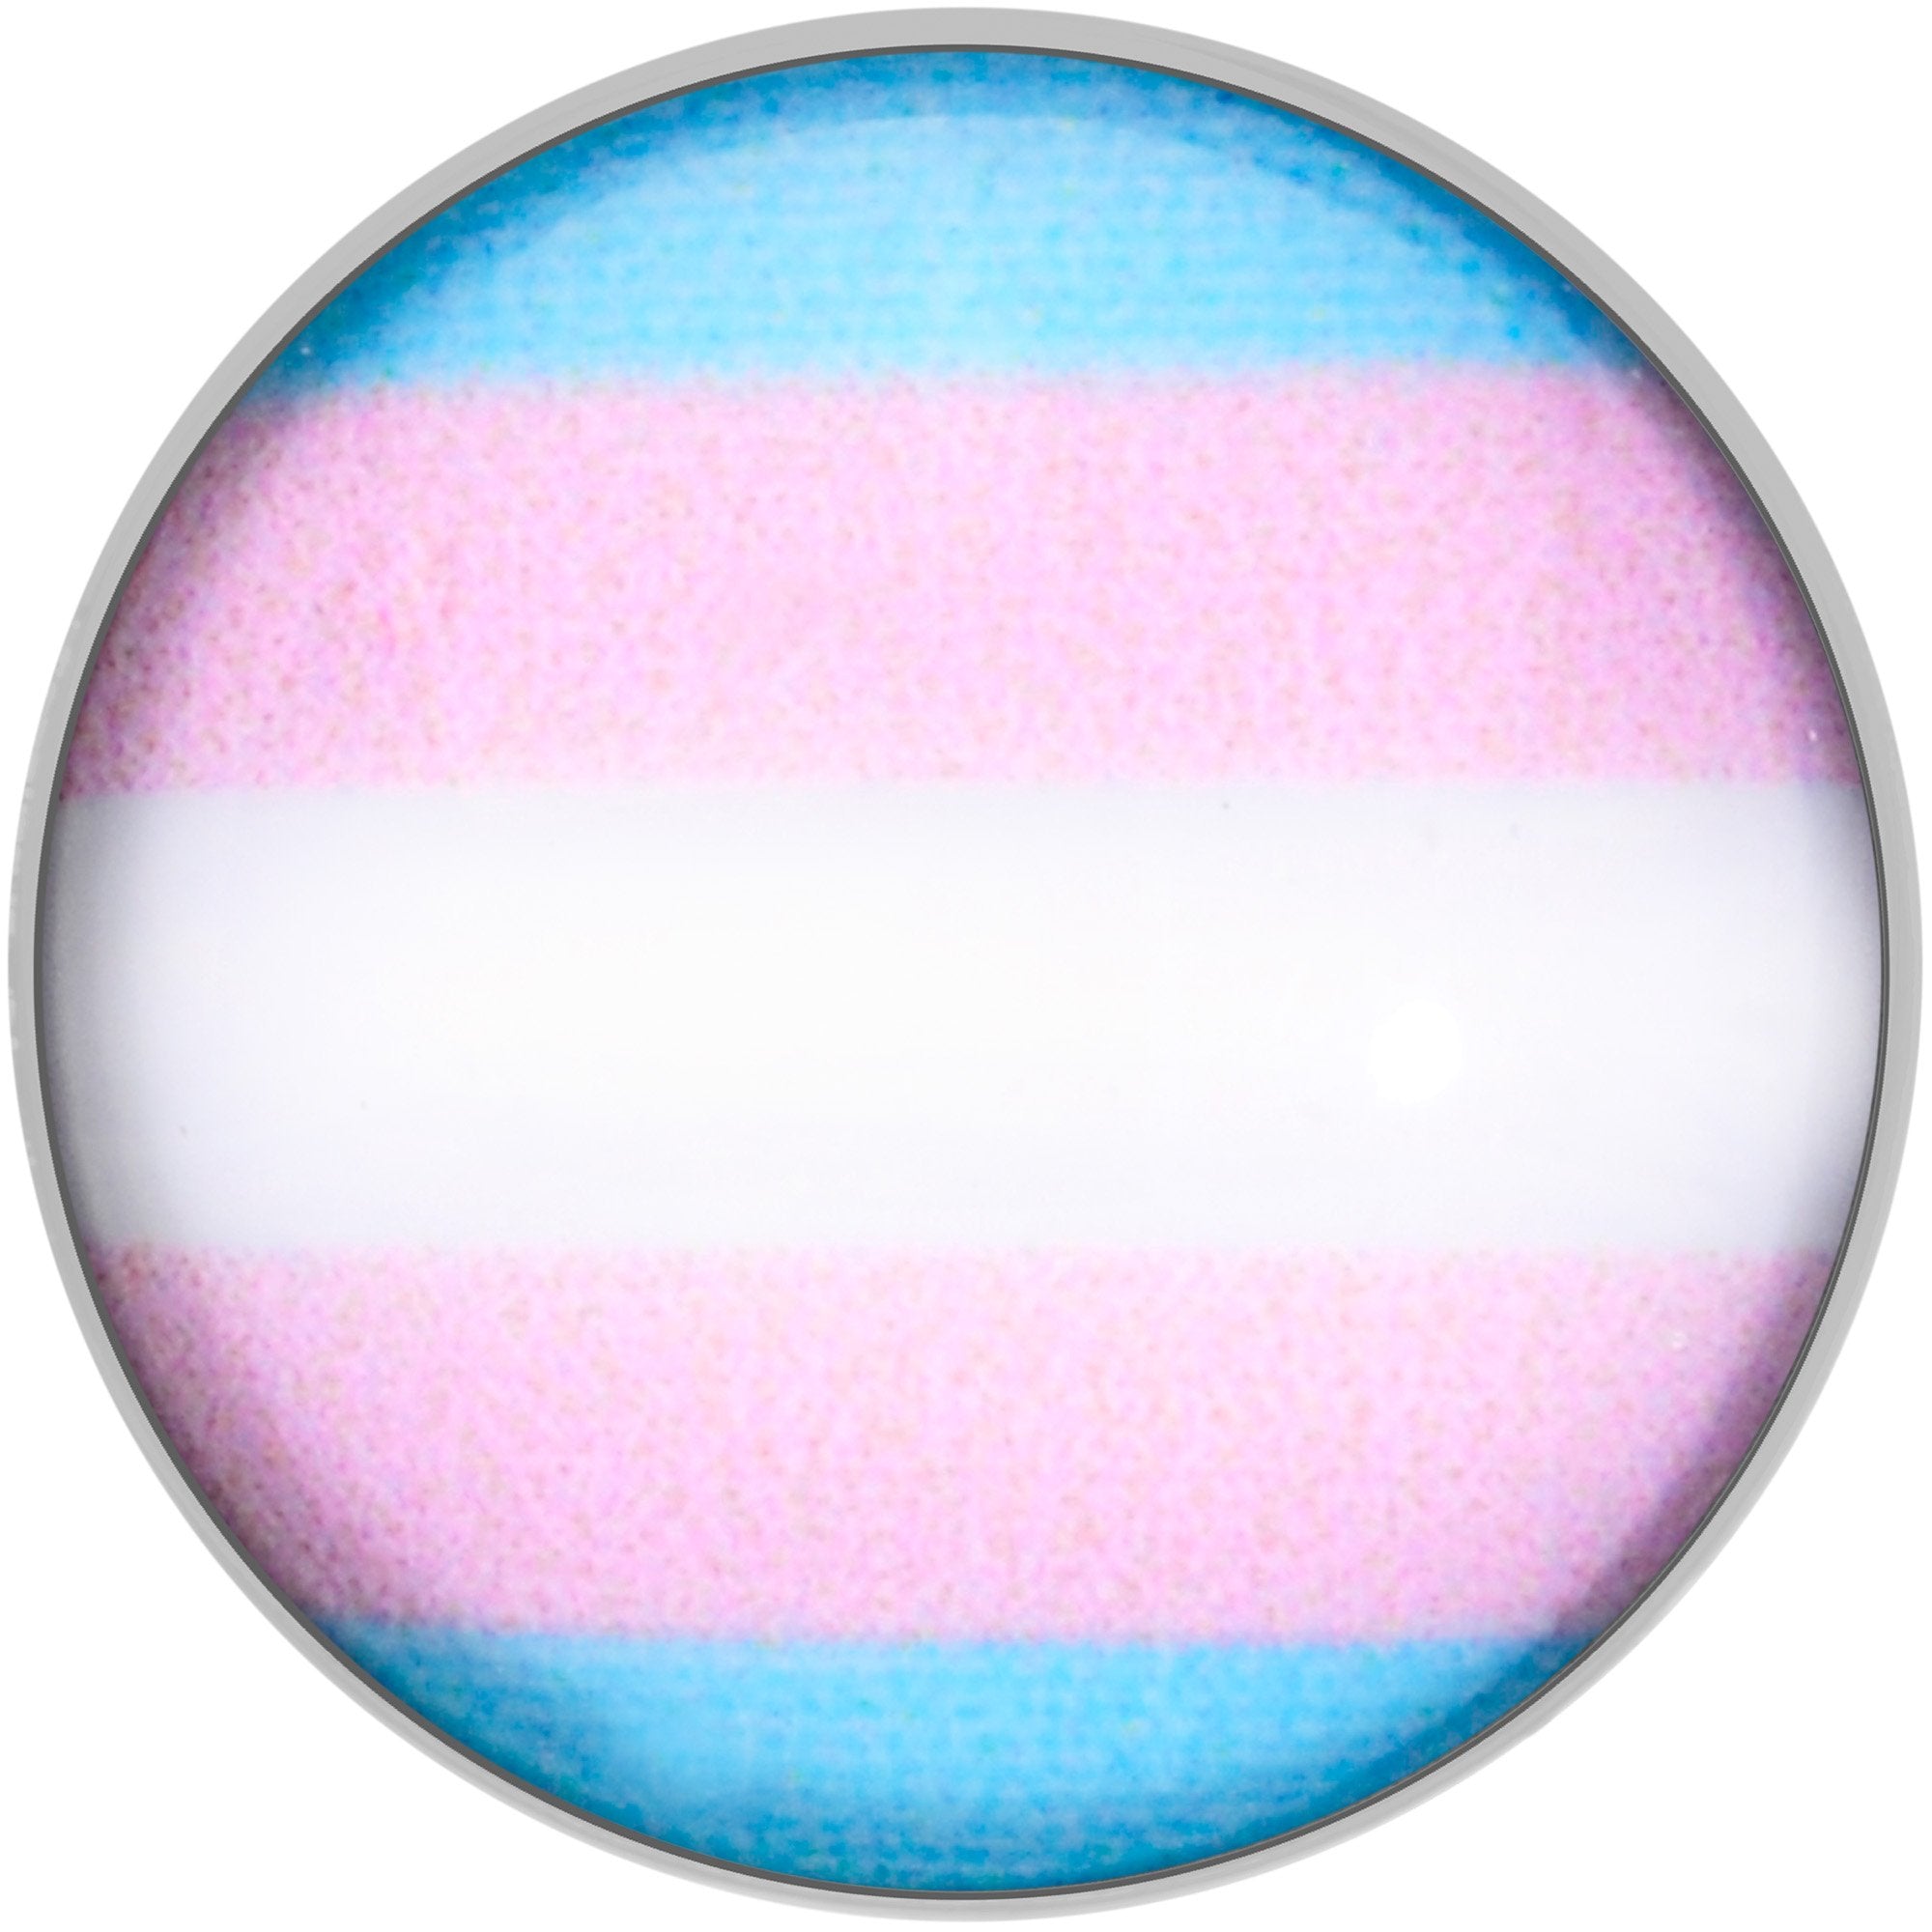 Pink Blue White Transgender Pride Flag Barbell Tongue Ring